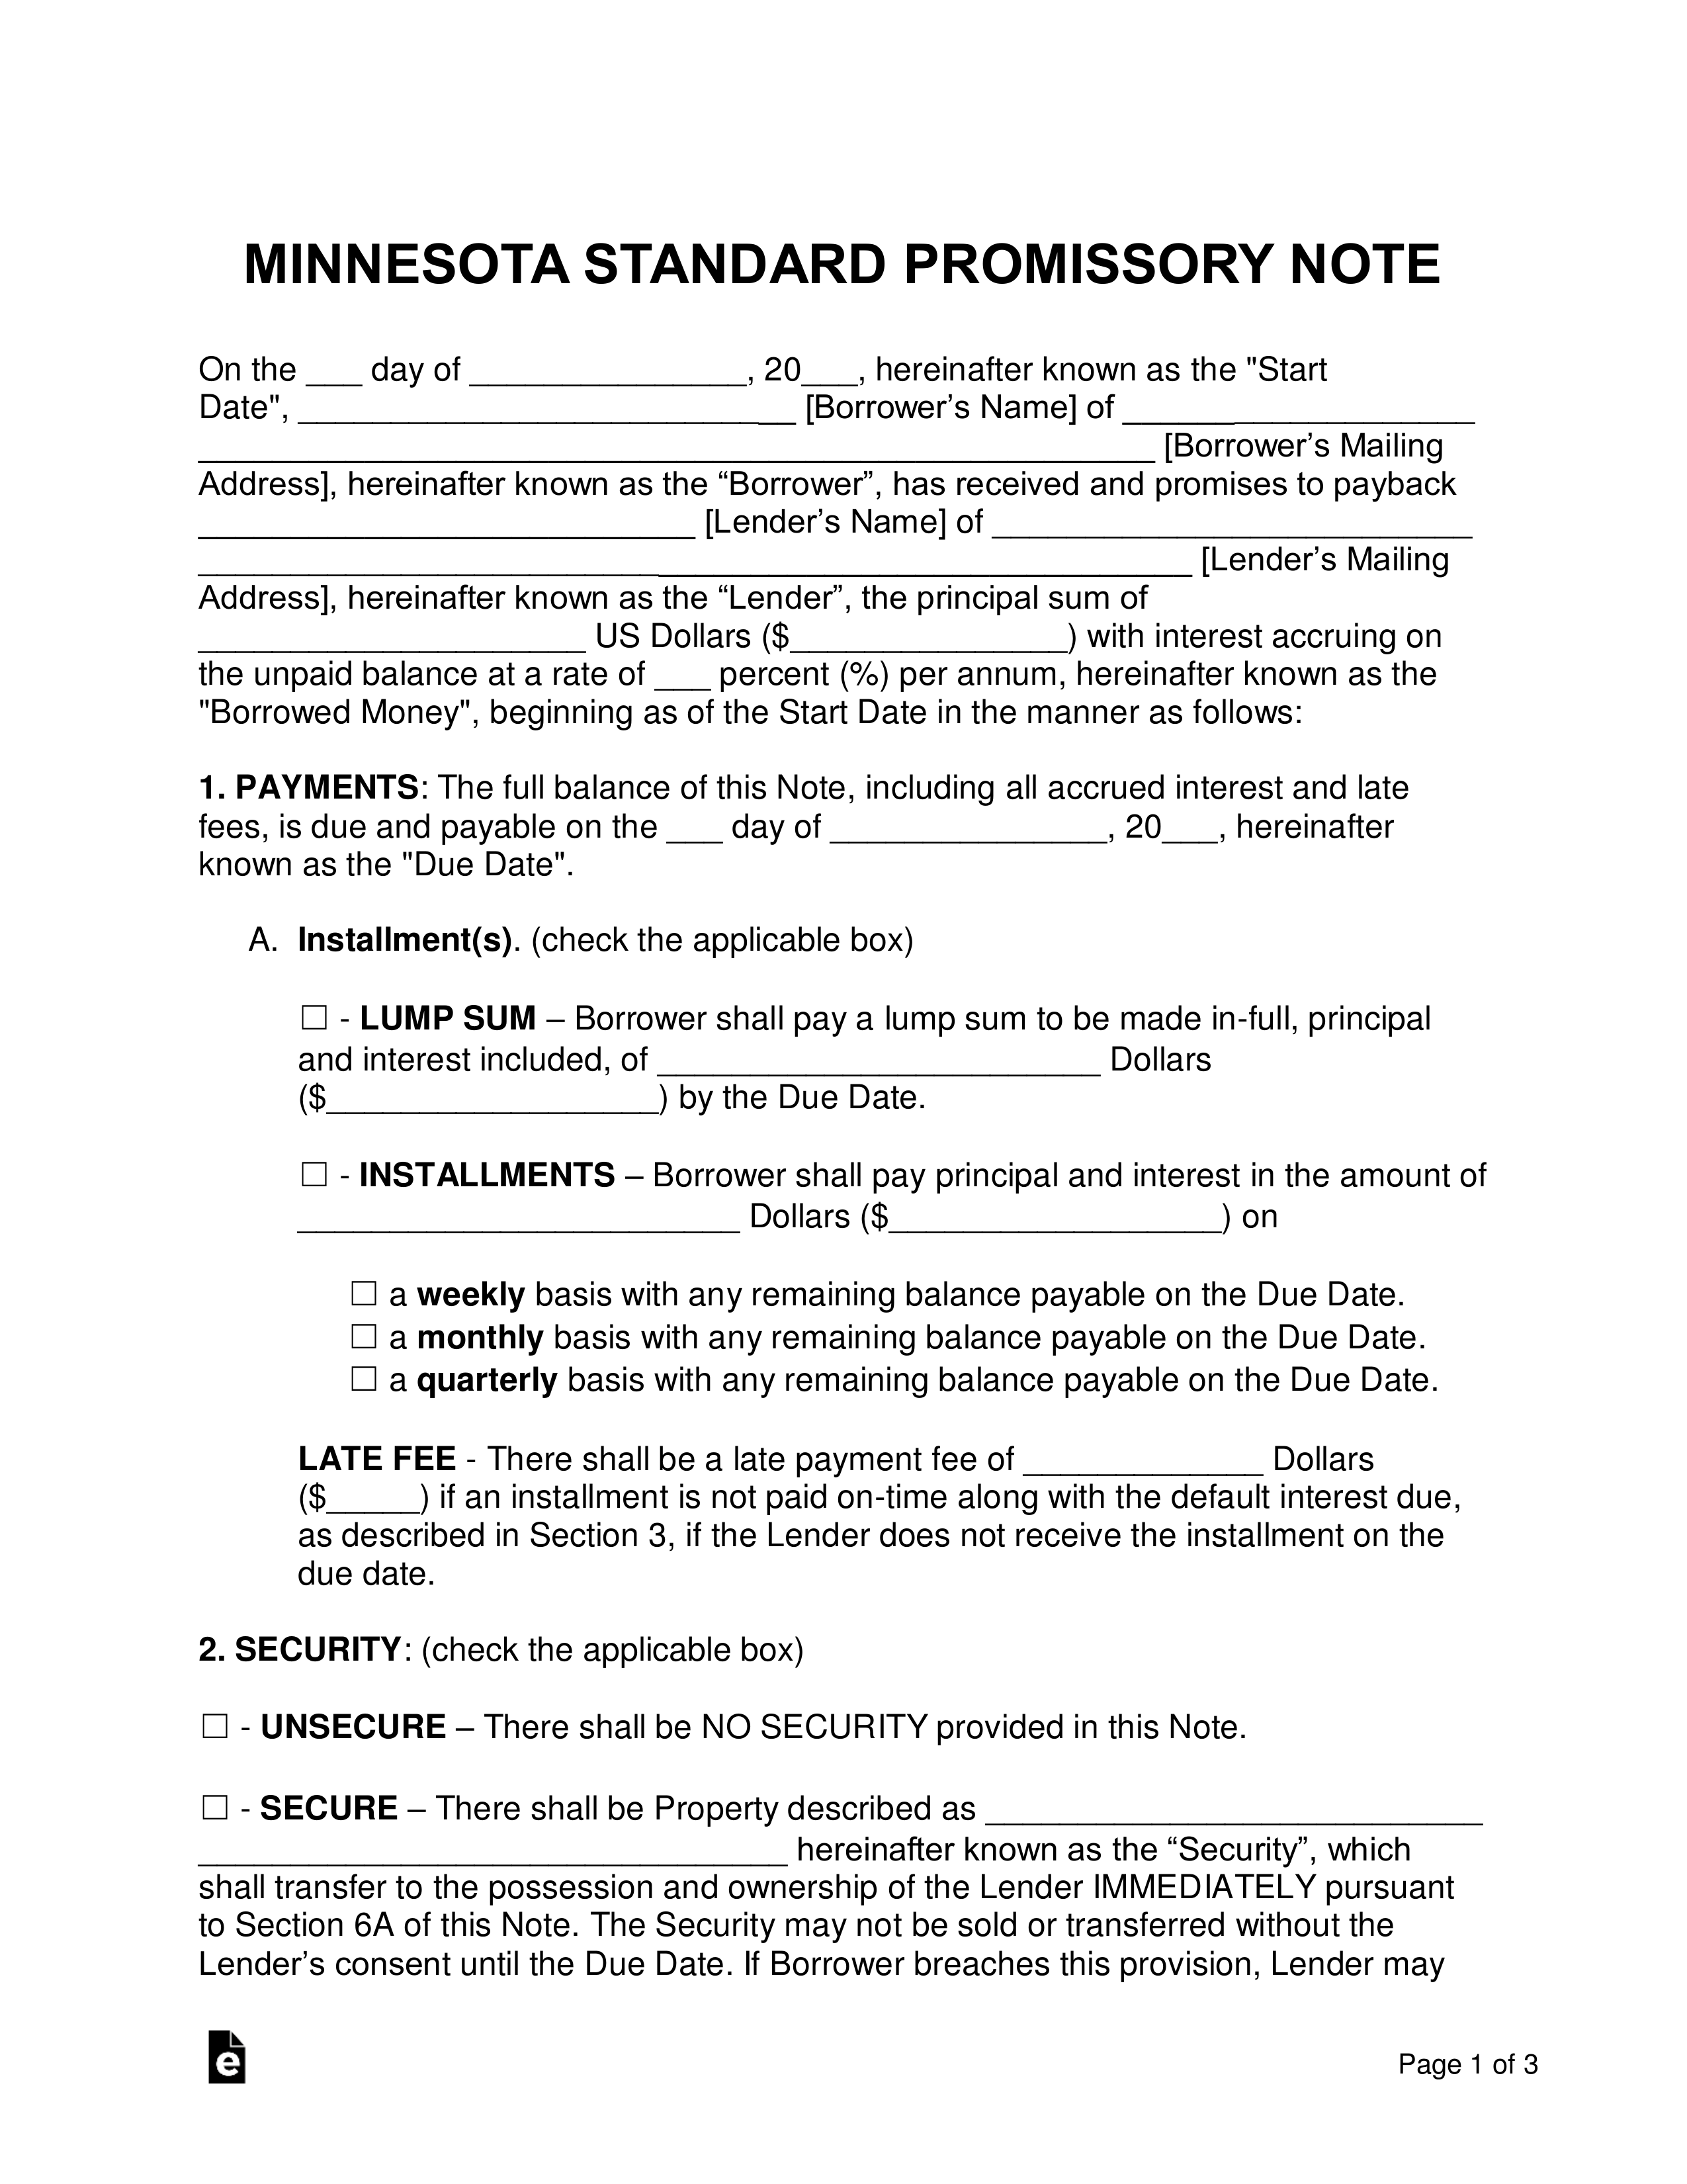 Minnesota Promissory Note Templates (2)